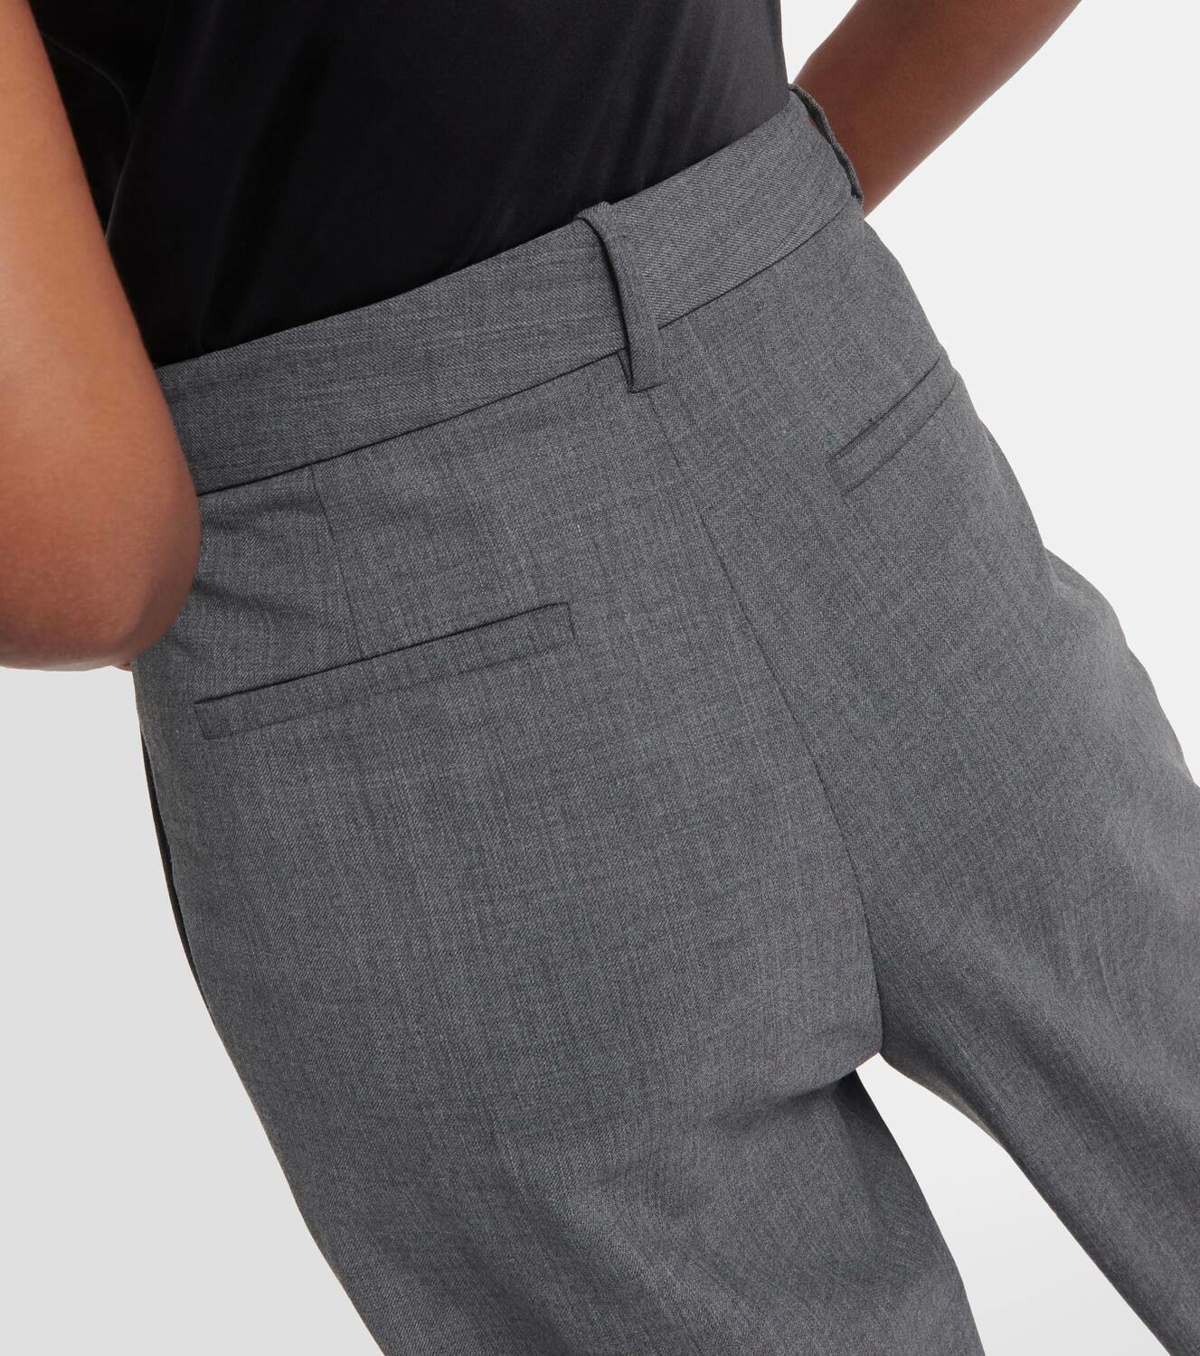 Black Corette stretch wool-blend flared trousers